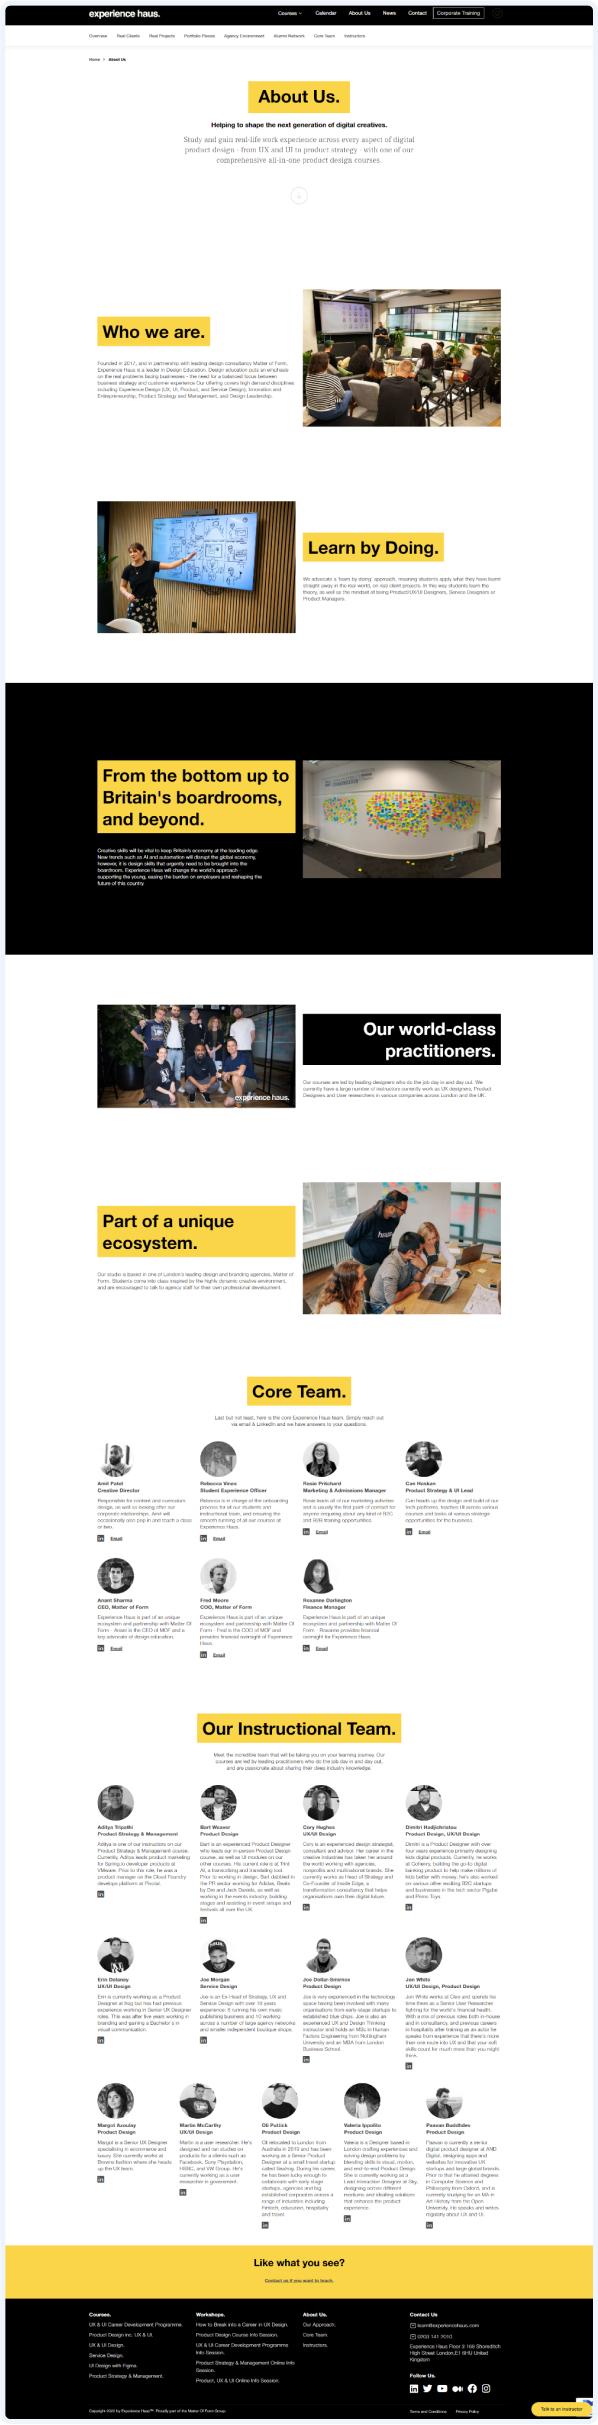 Website for UI/UX Design & Innovation Training Studio in London